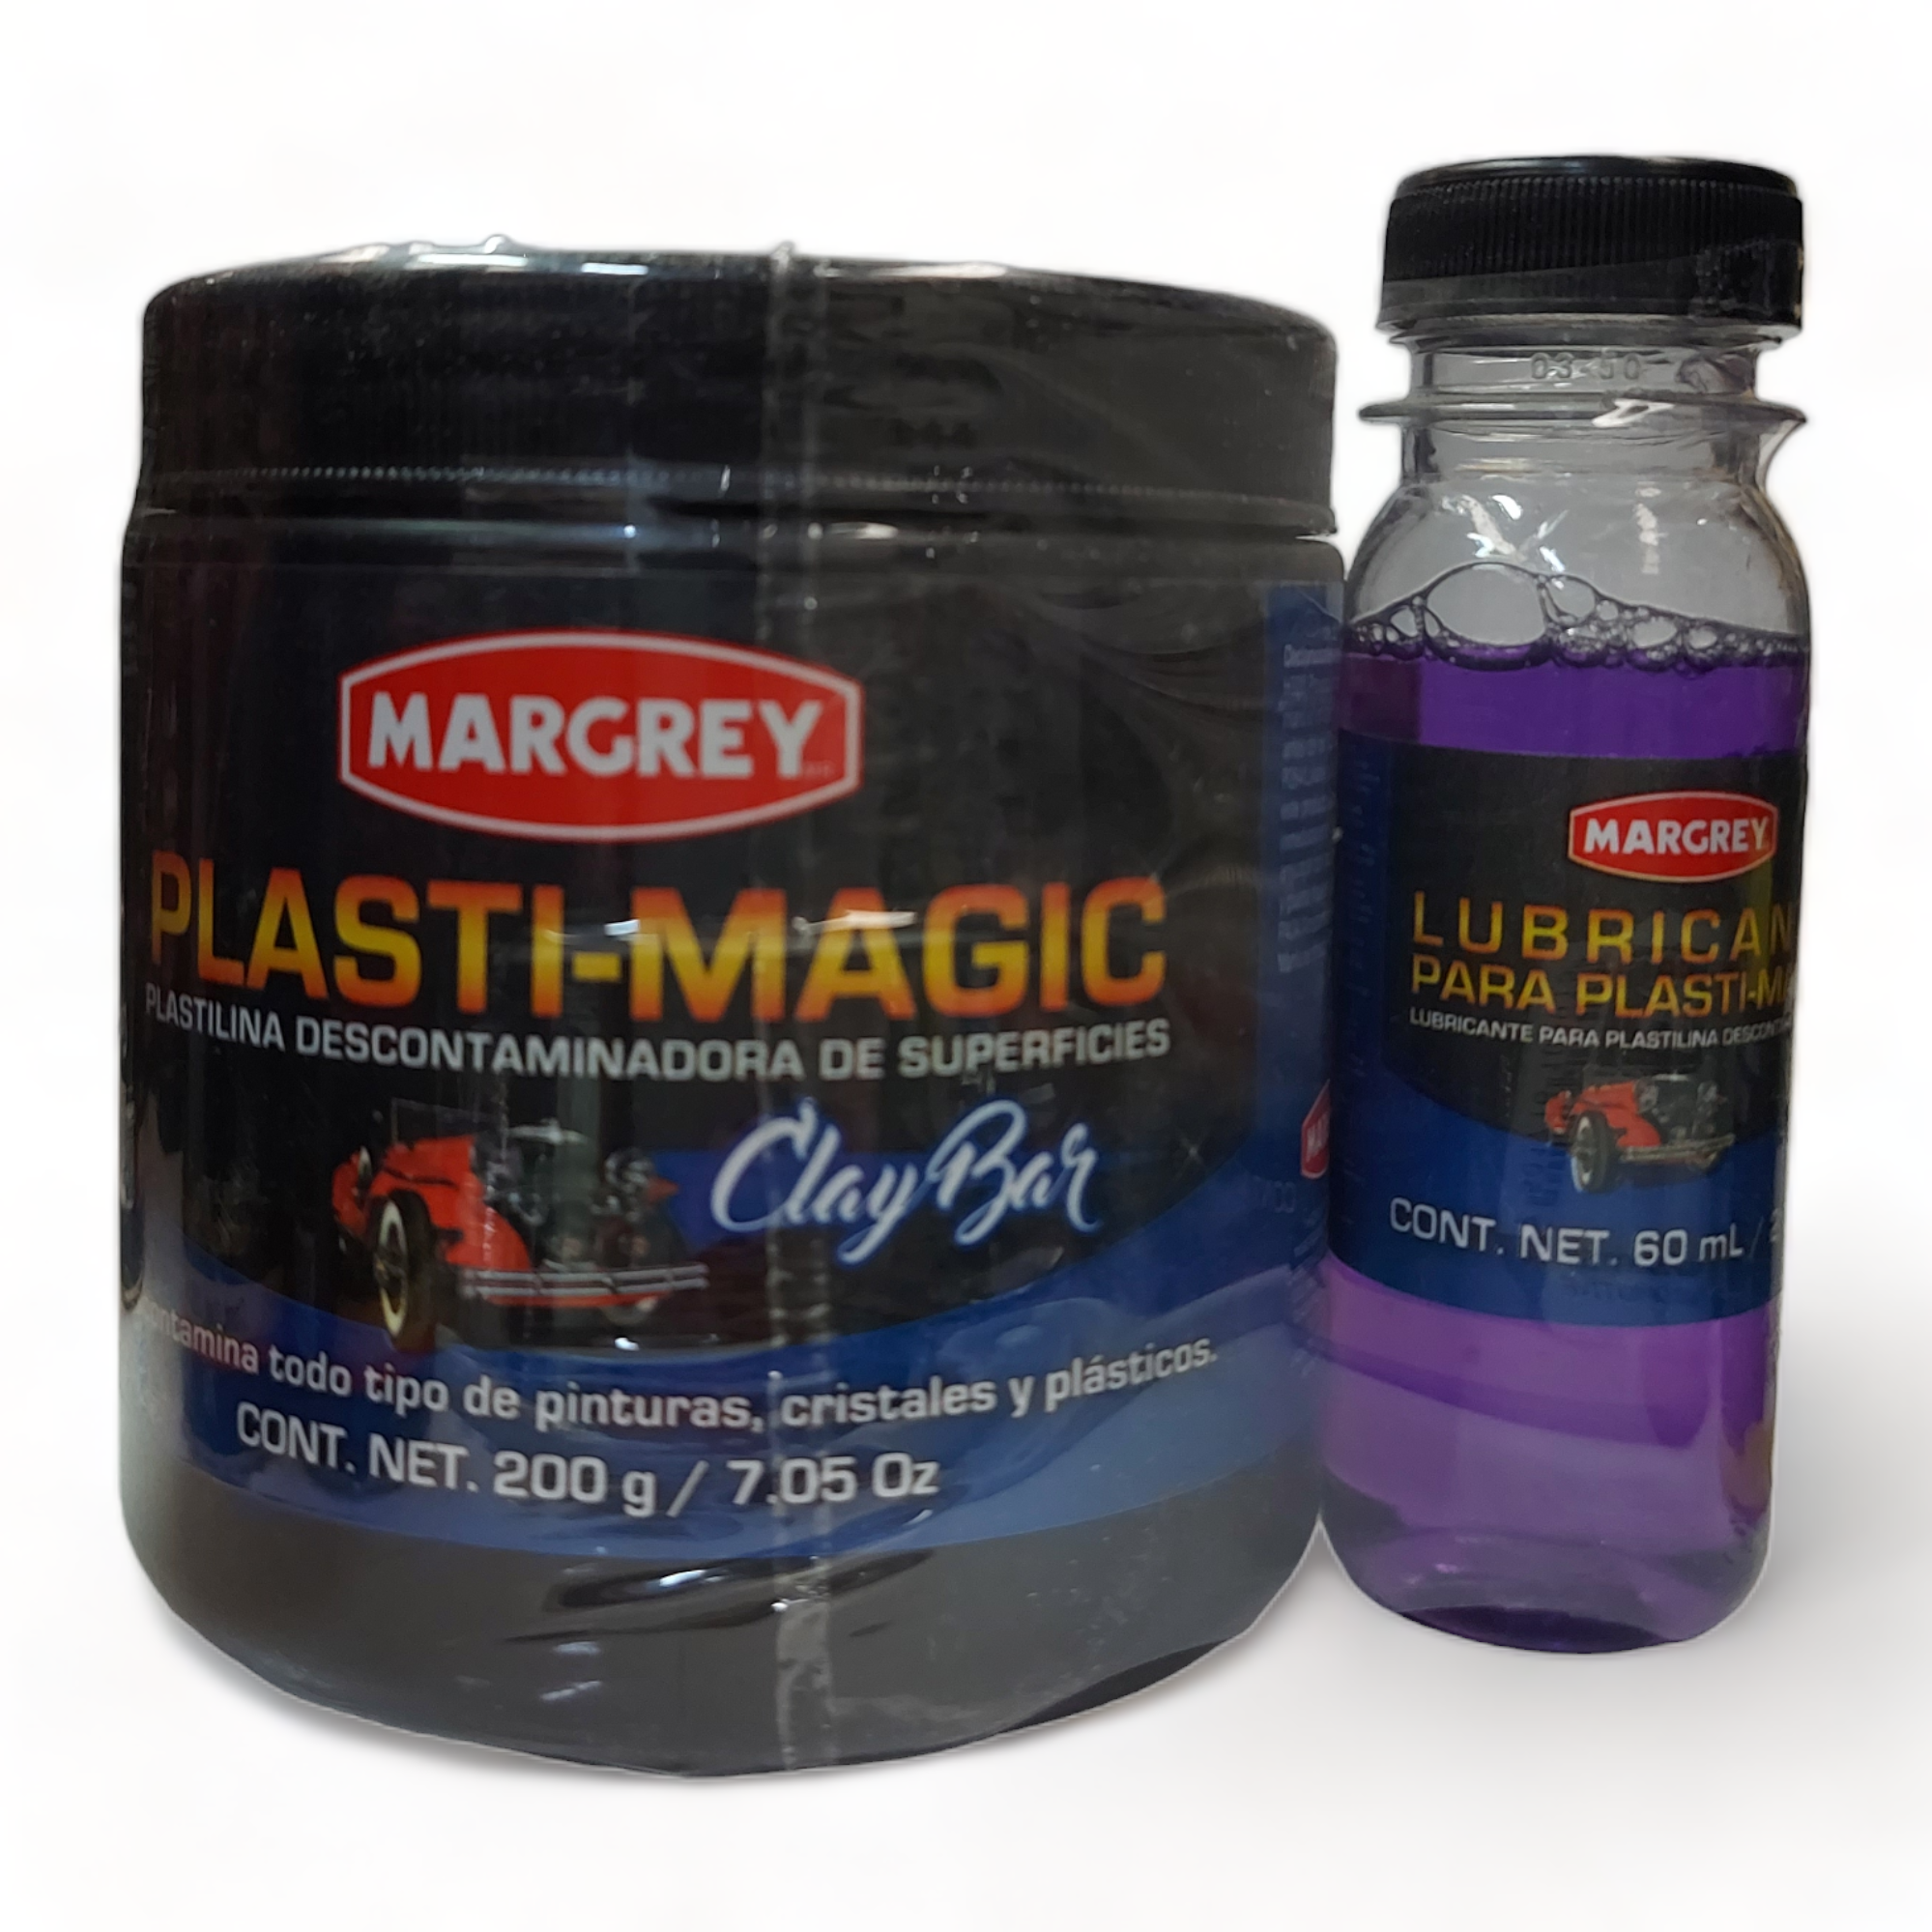 Plasti-magic desincrustante Margrey 200g - Oscar's Automotive 